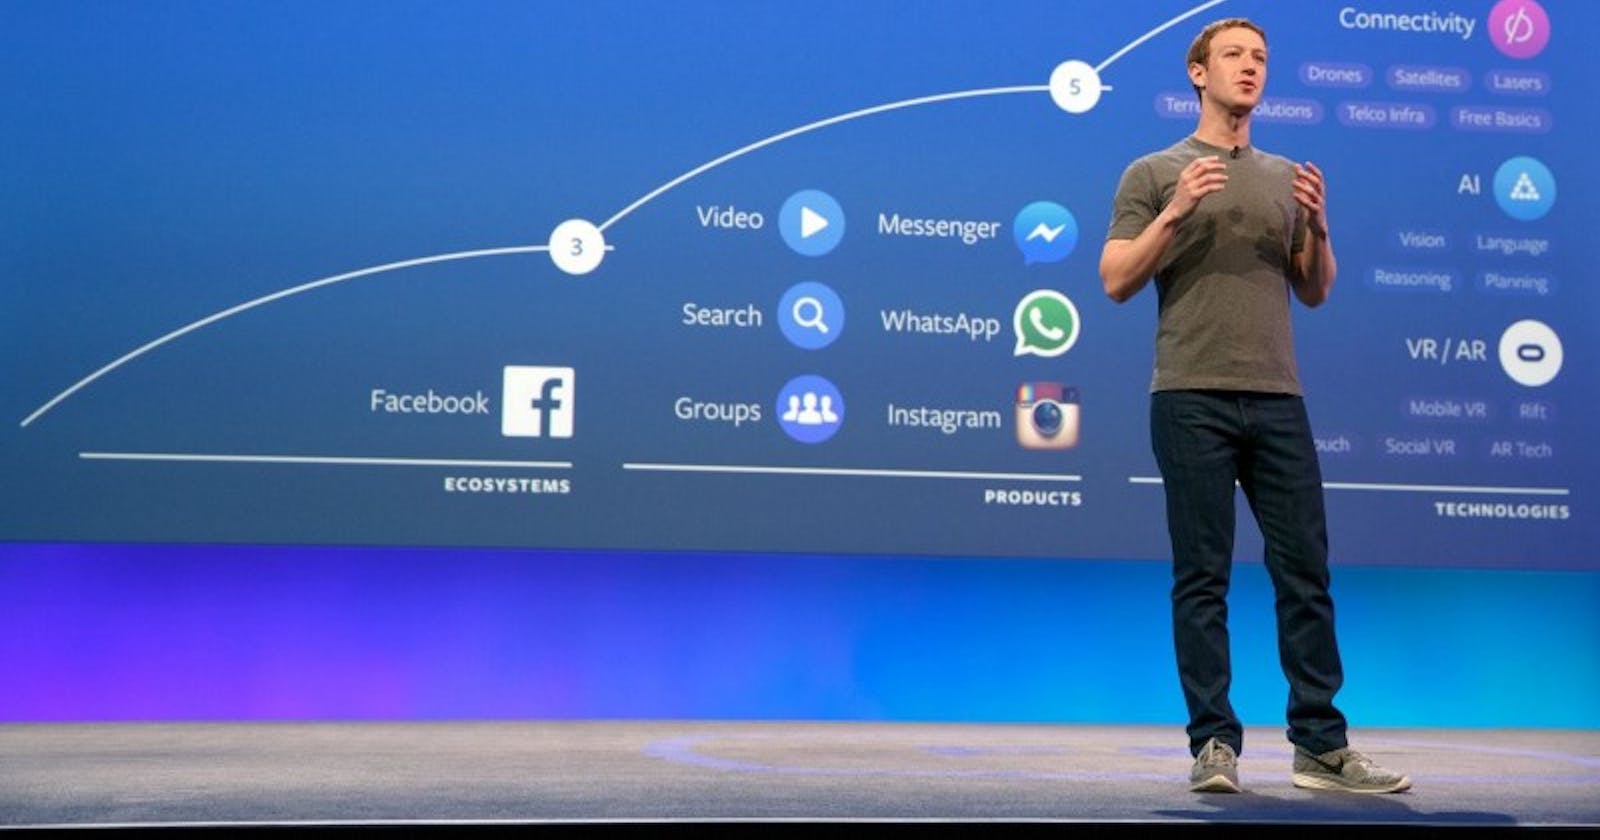 Facebook launches AR Platform at F8 Developer Conference